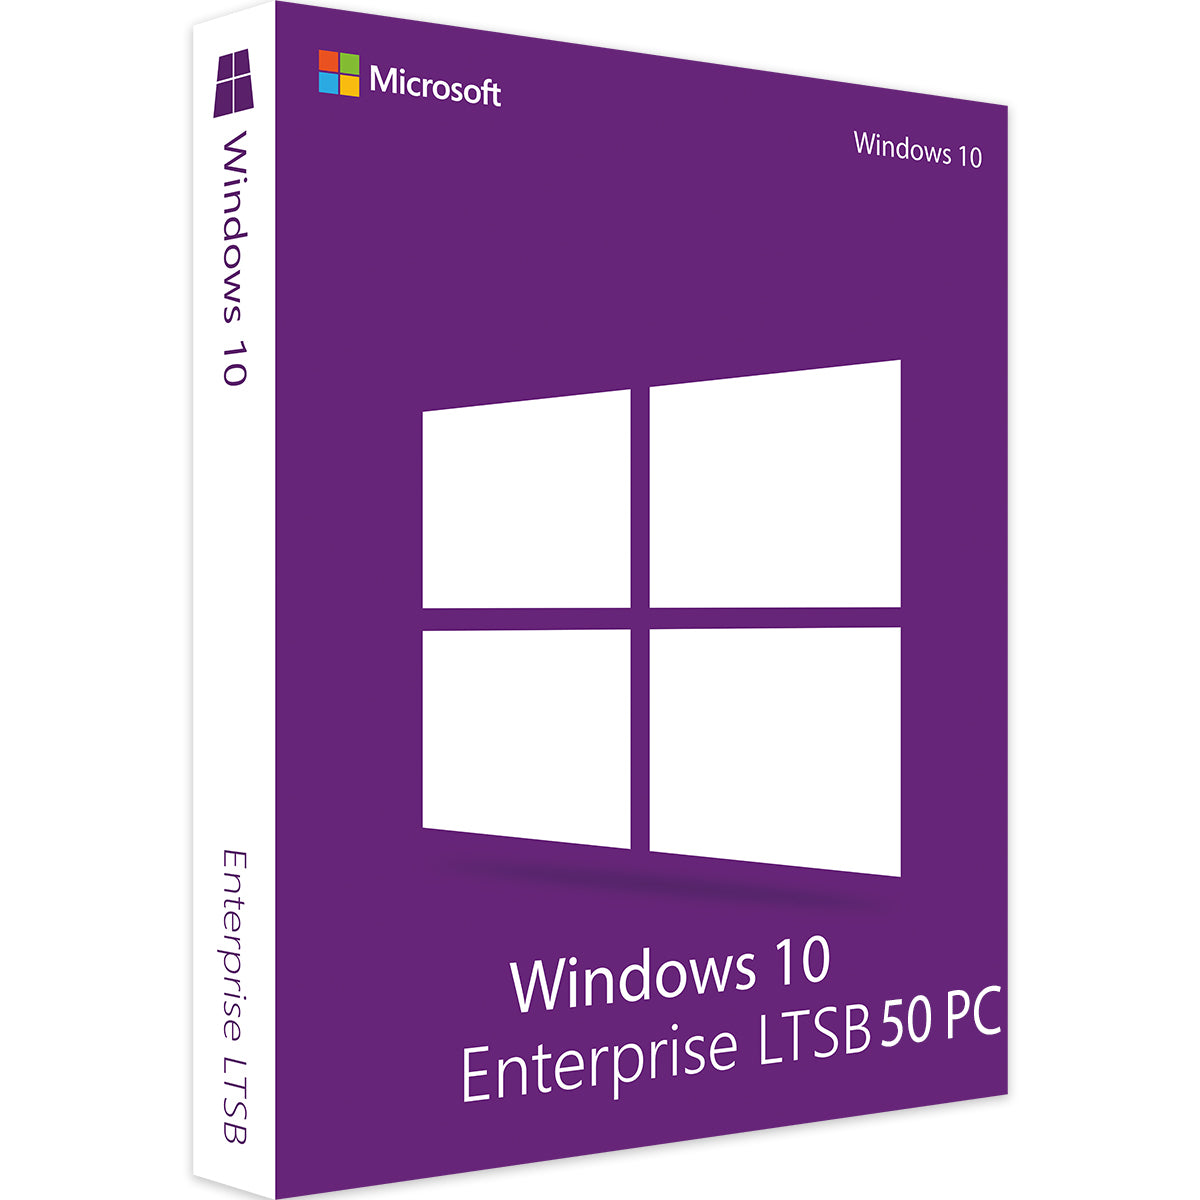 windows 10 enterprise ltsb 2016 iso